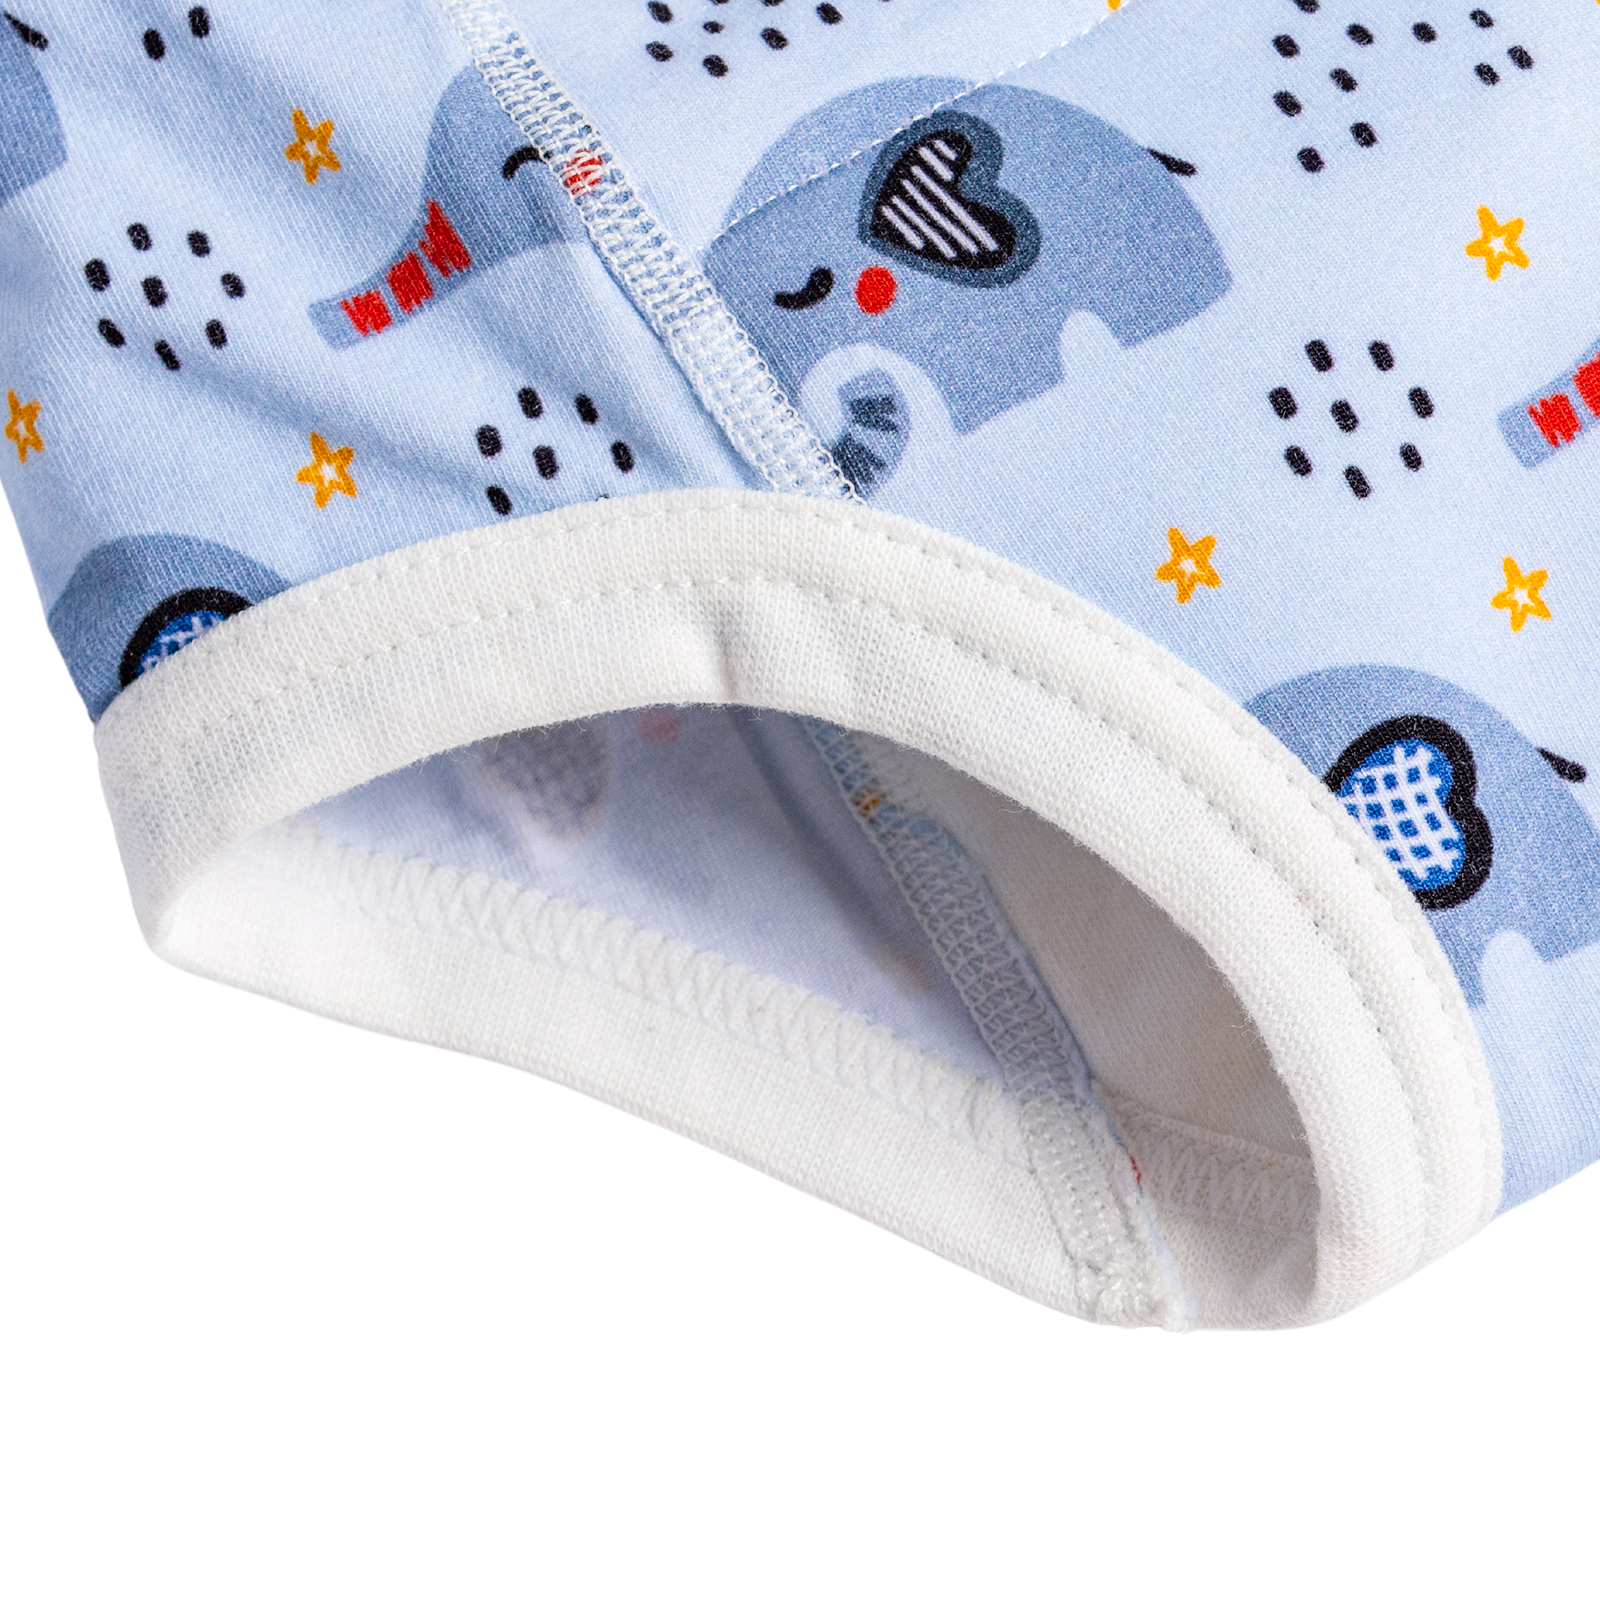 Snug Potty Training Pants Snug Farm Collection - Pack Of 2, बच्चो की पैंट -  Snugkins, Thane | ID: 2852717086697